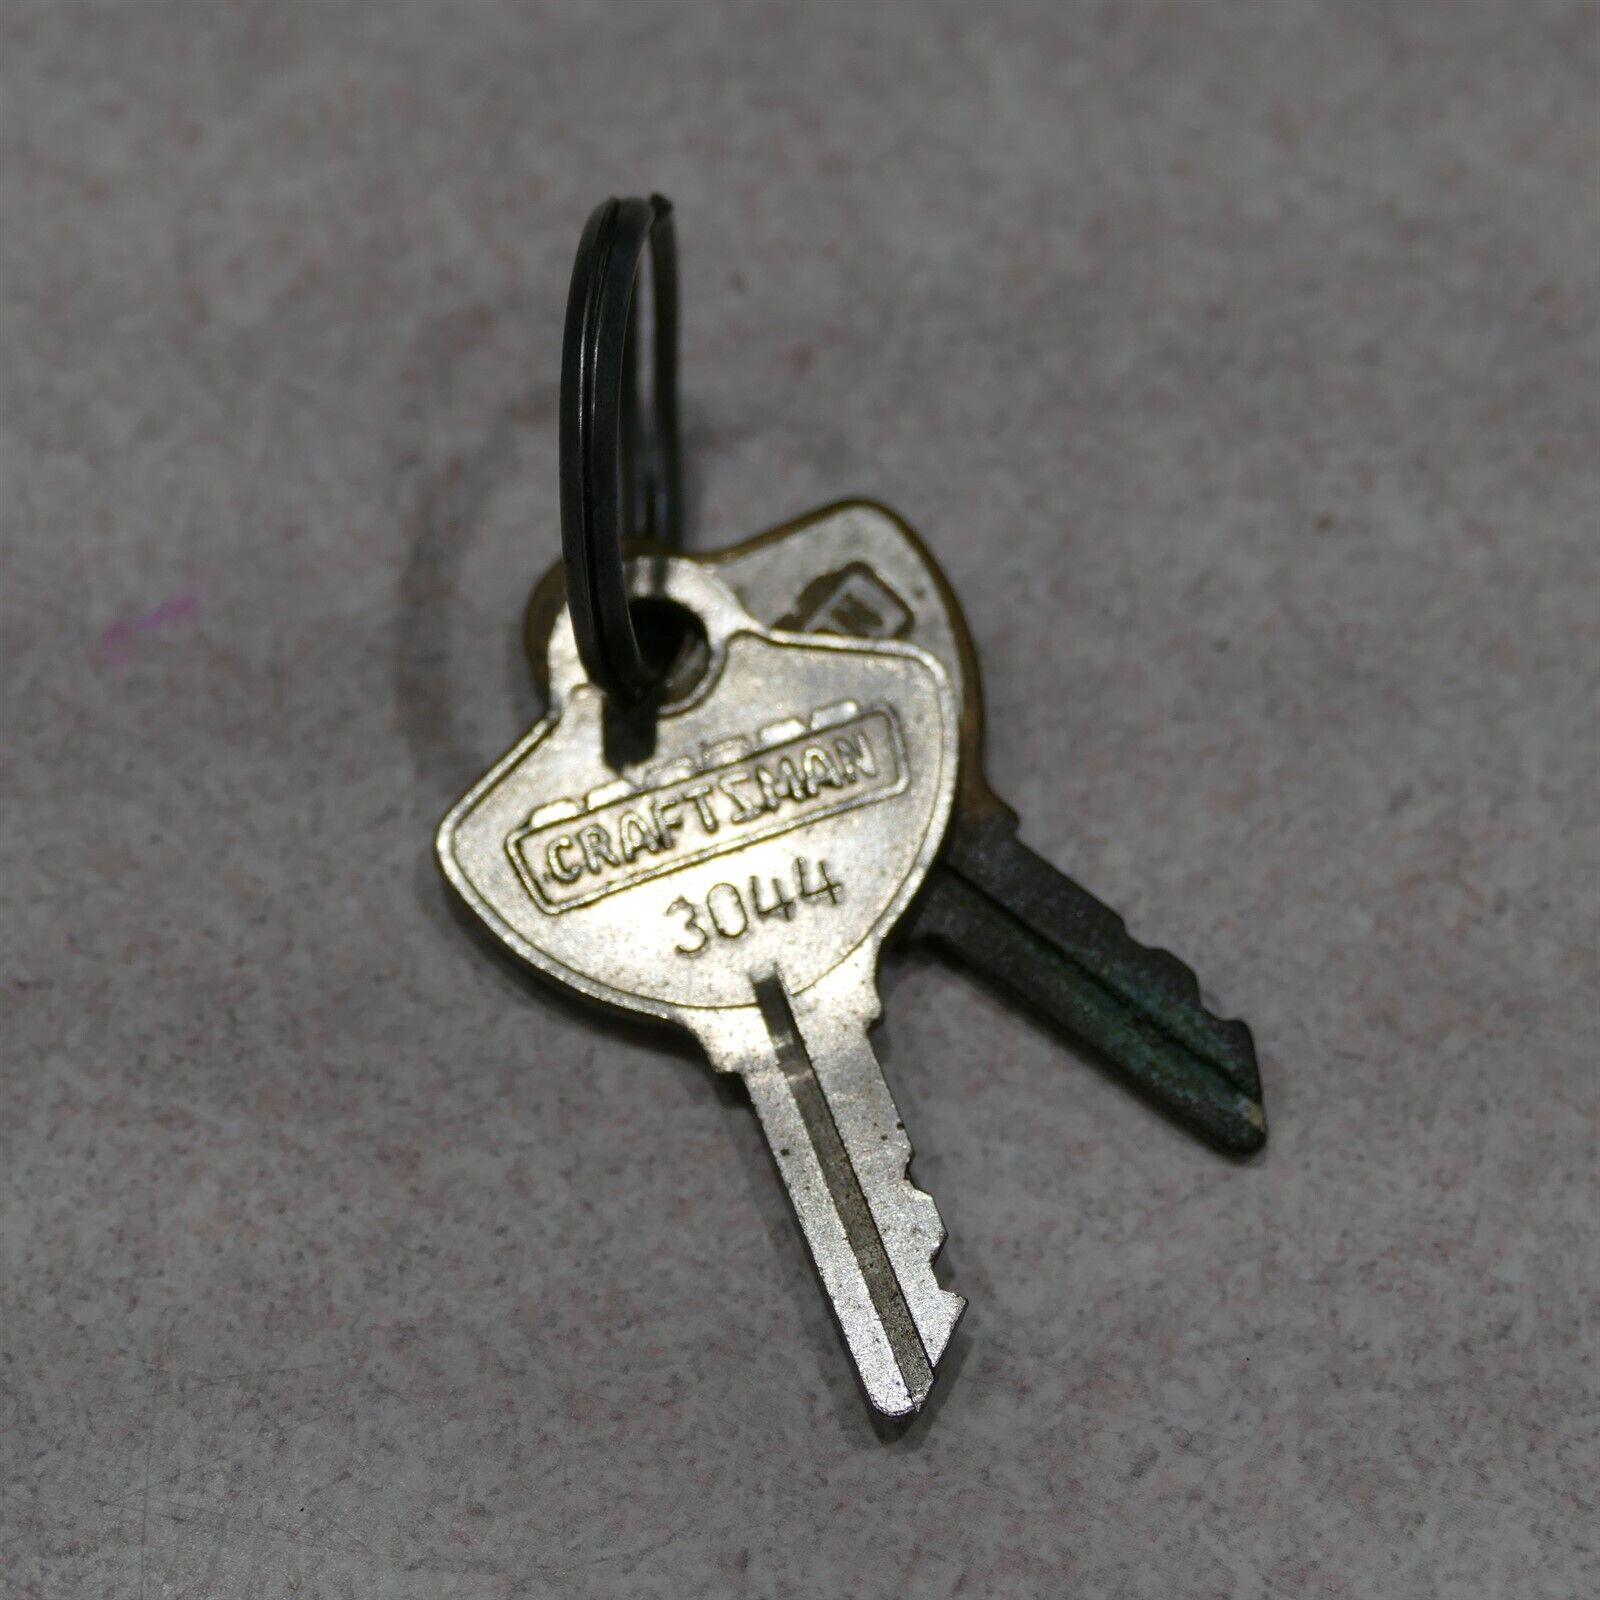 2 Vintage Factory Original Craftsman Keys 3044 Replacement Keys Only ~ Used